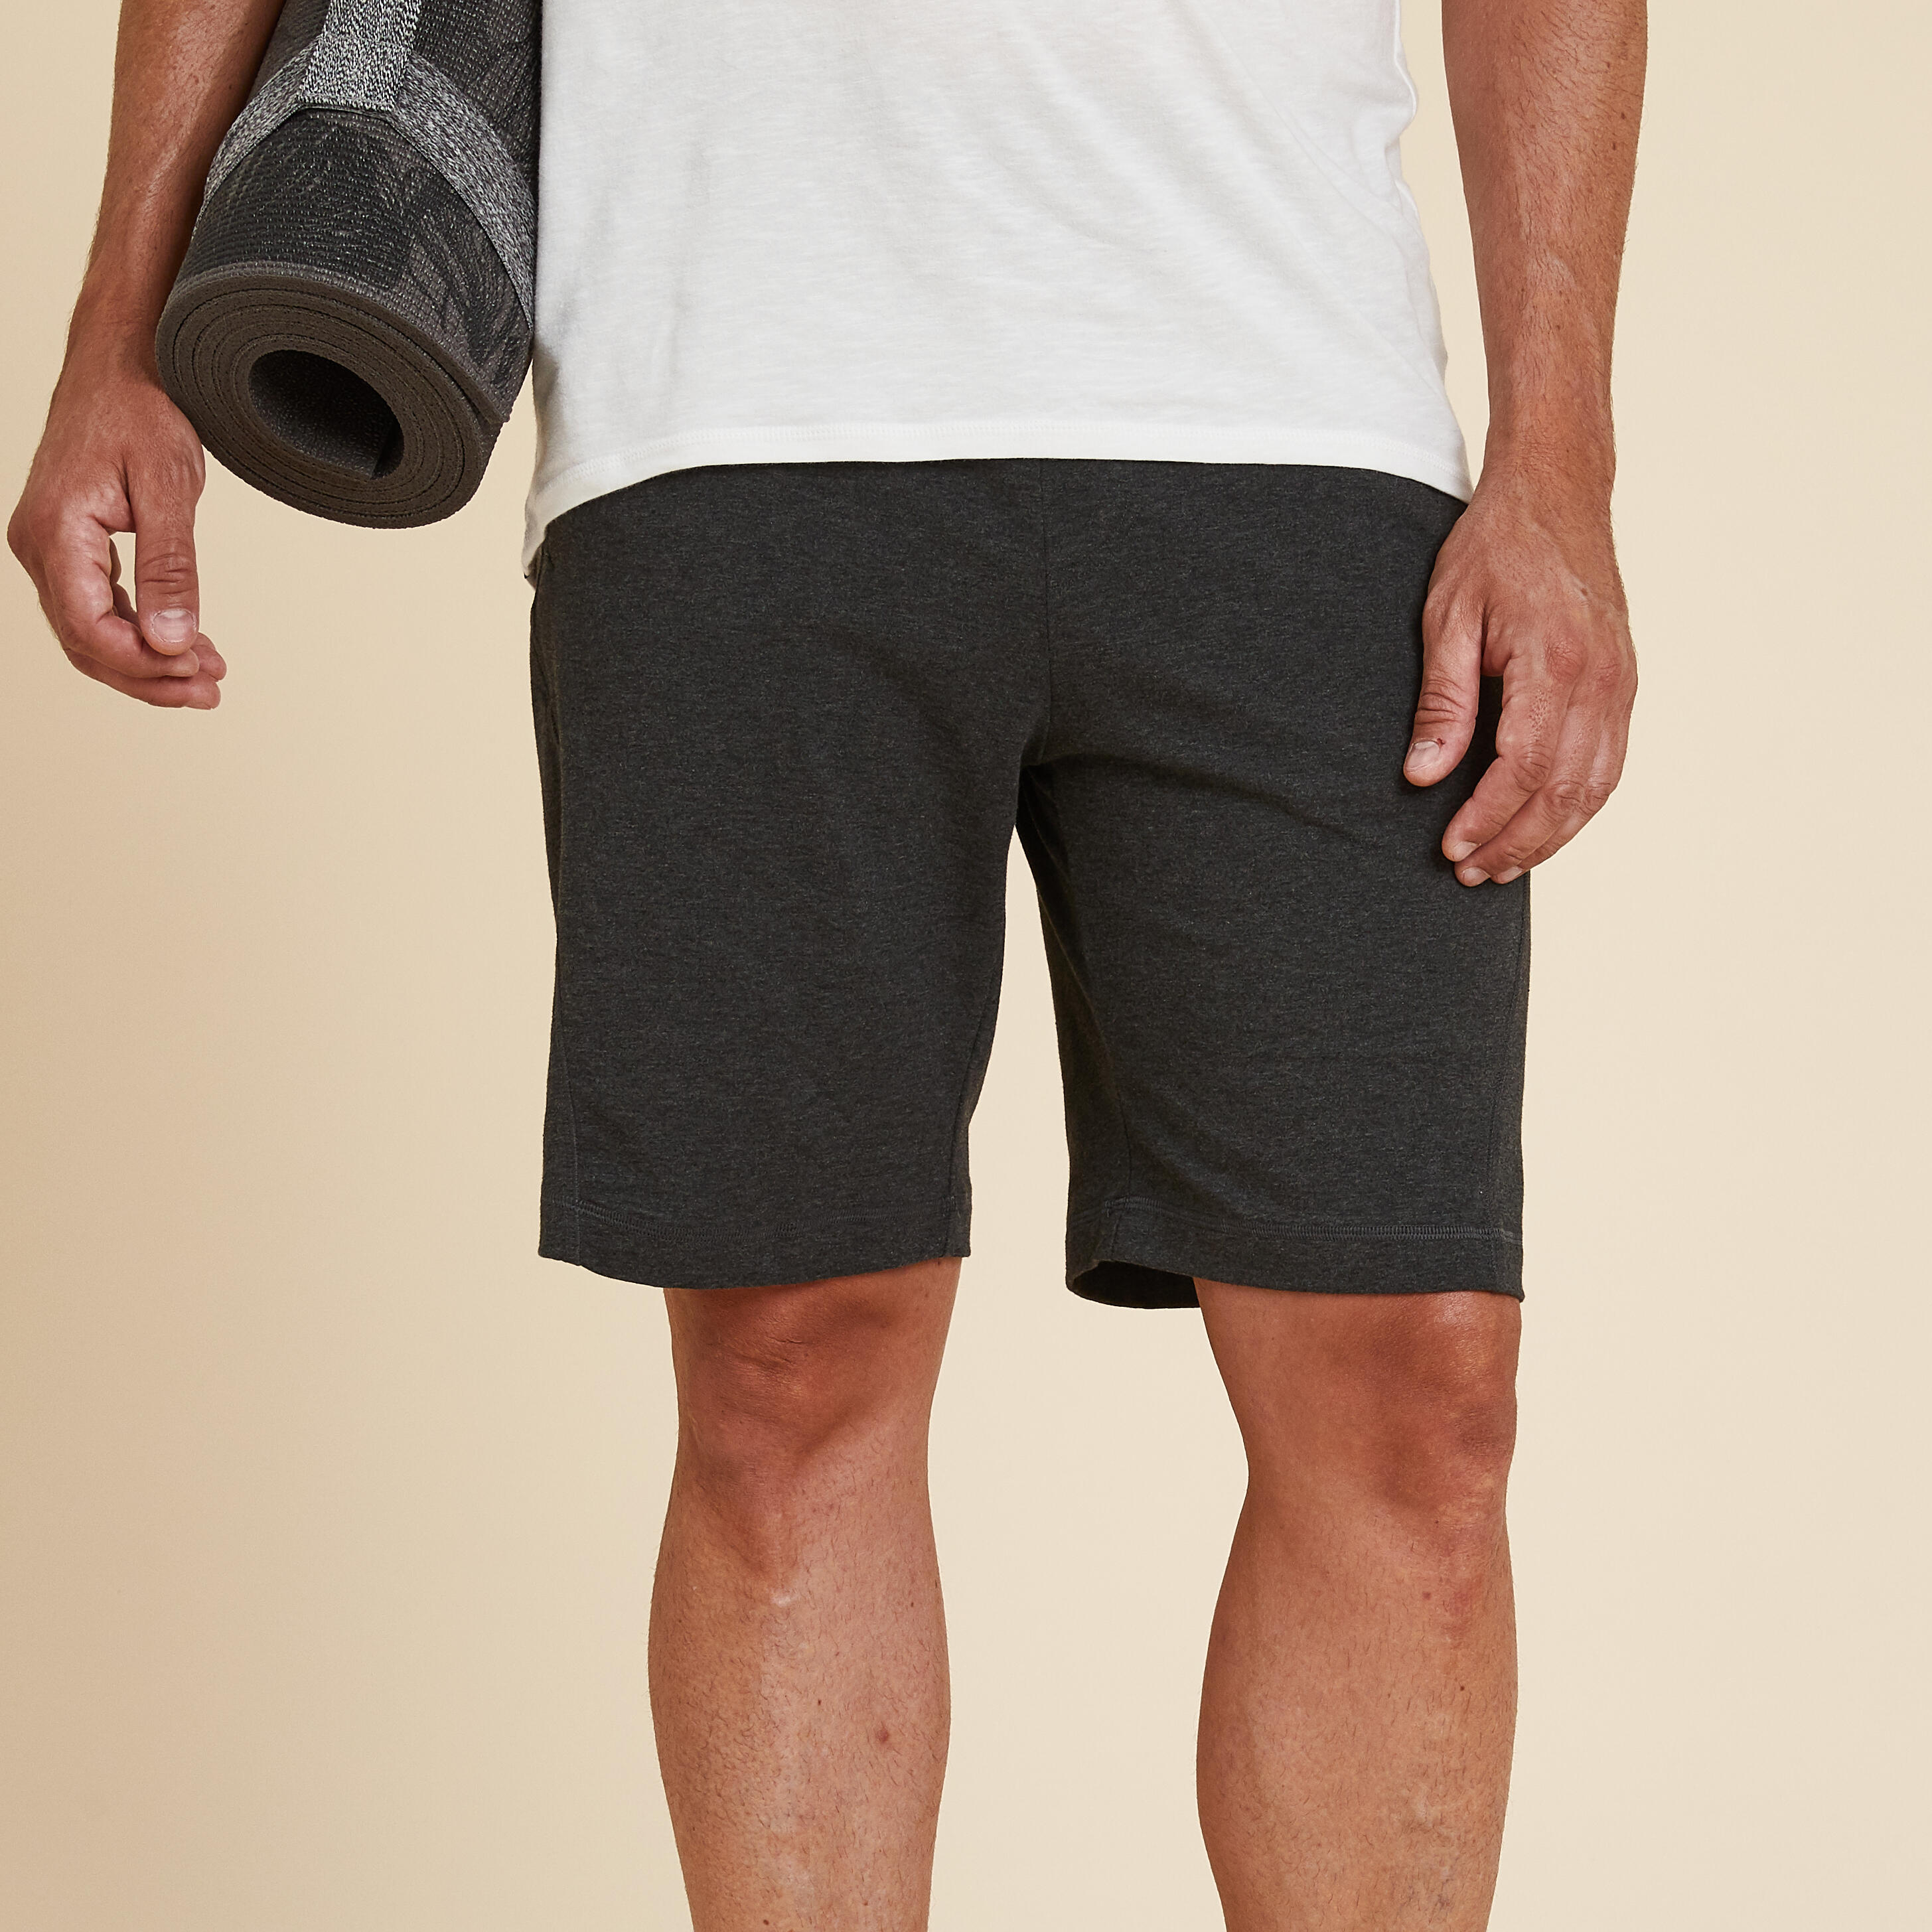 Shorts Regular Fit Drawstring Waist Summer Beach Yoga Short Pants For Men